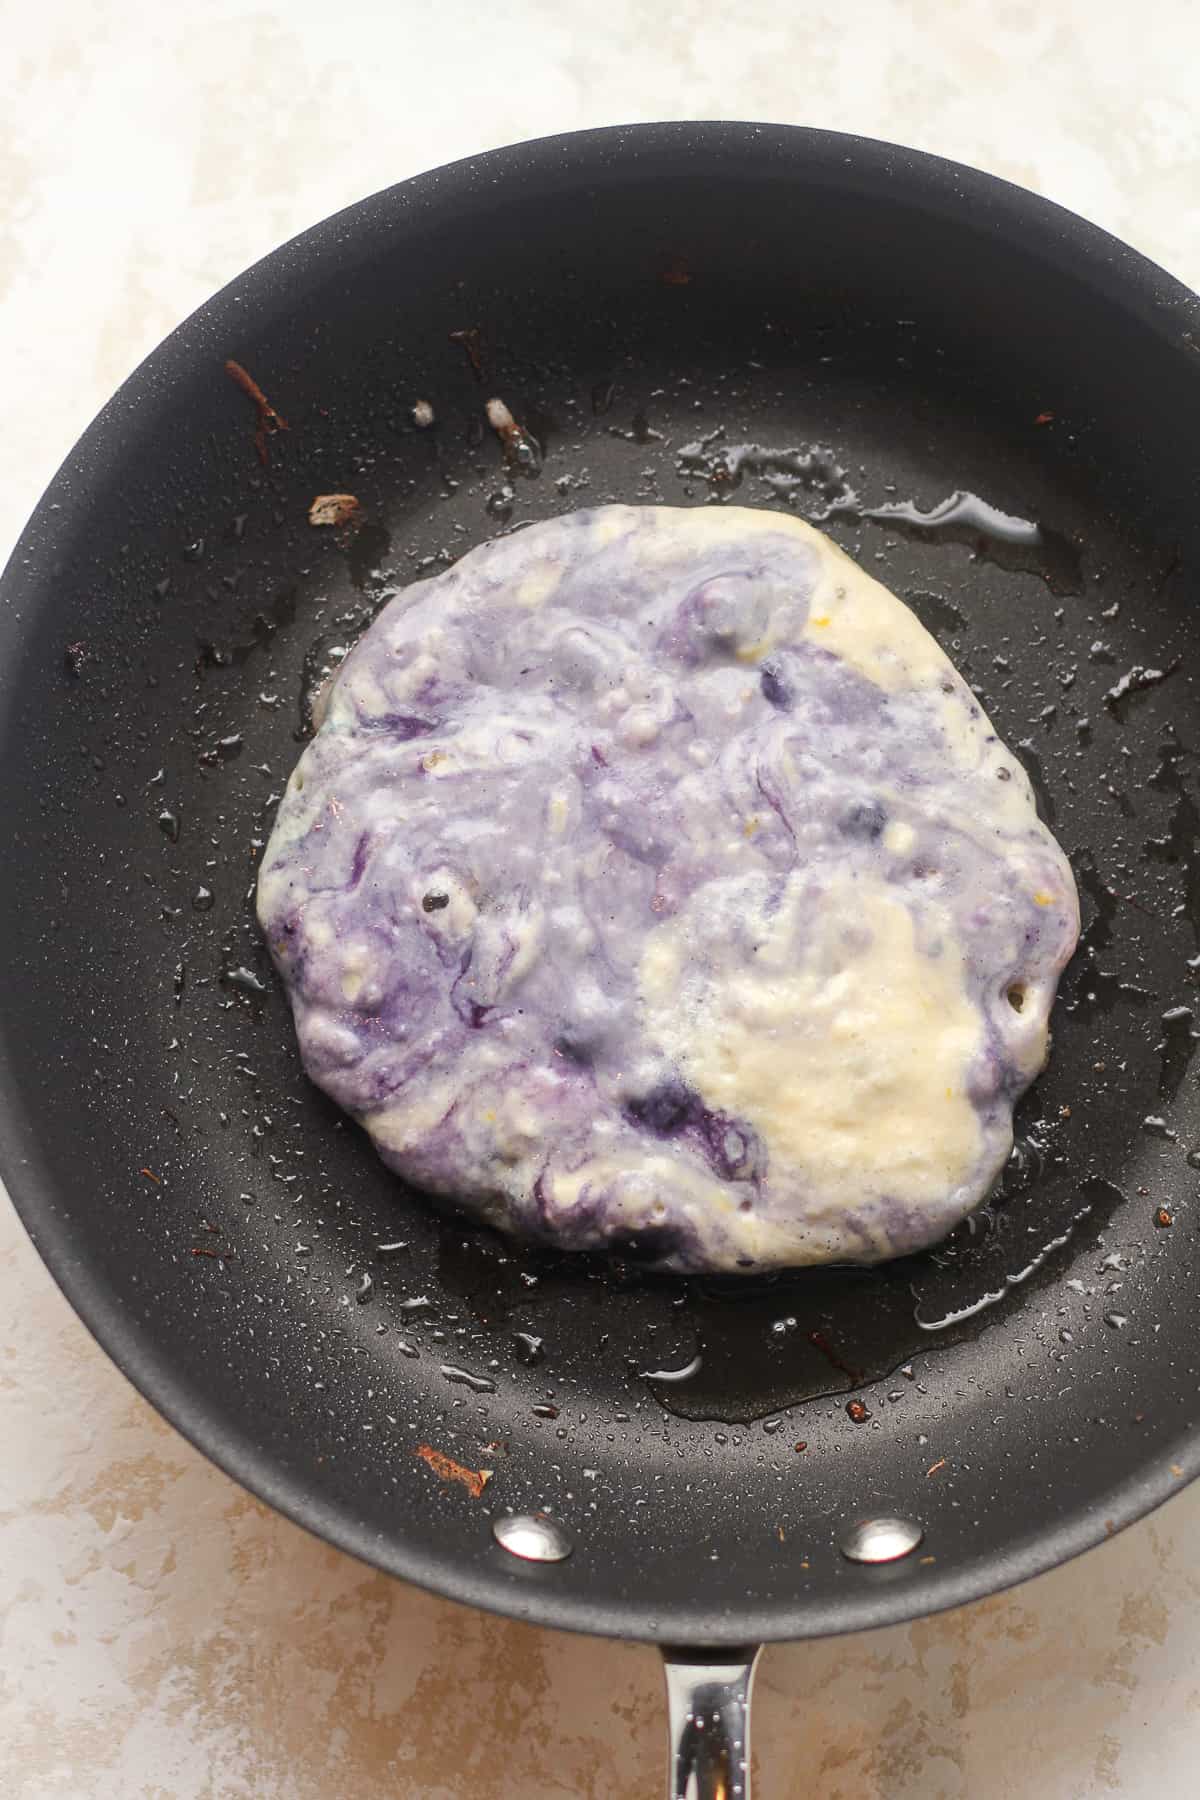 One blueberry lemon pancake in the pan before flipping.